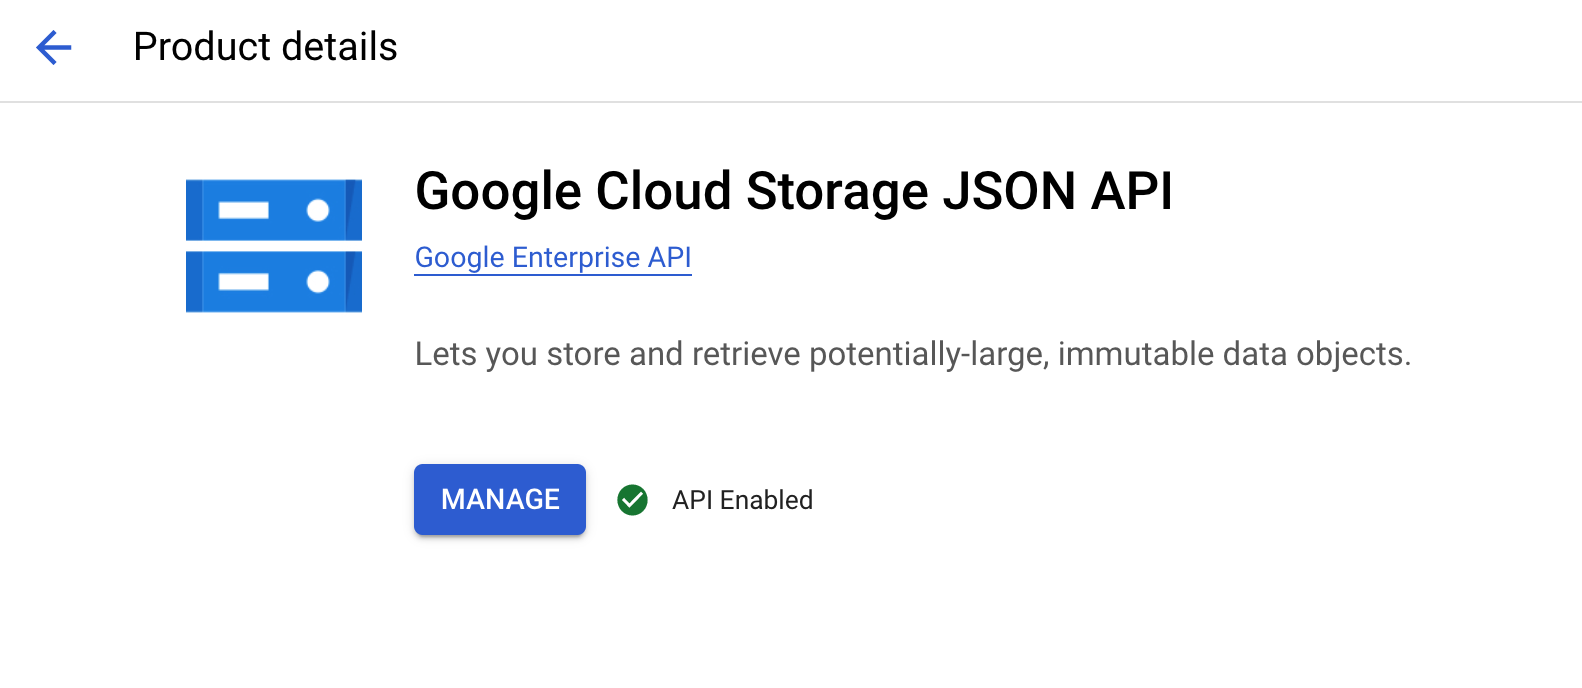 Google Cloud Storage JSON API